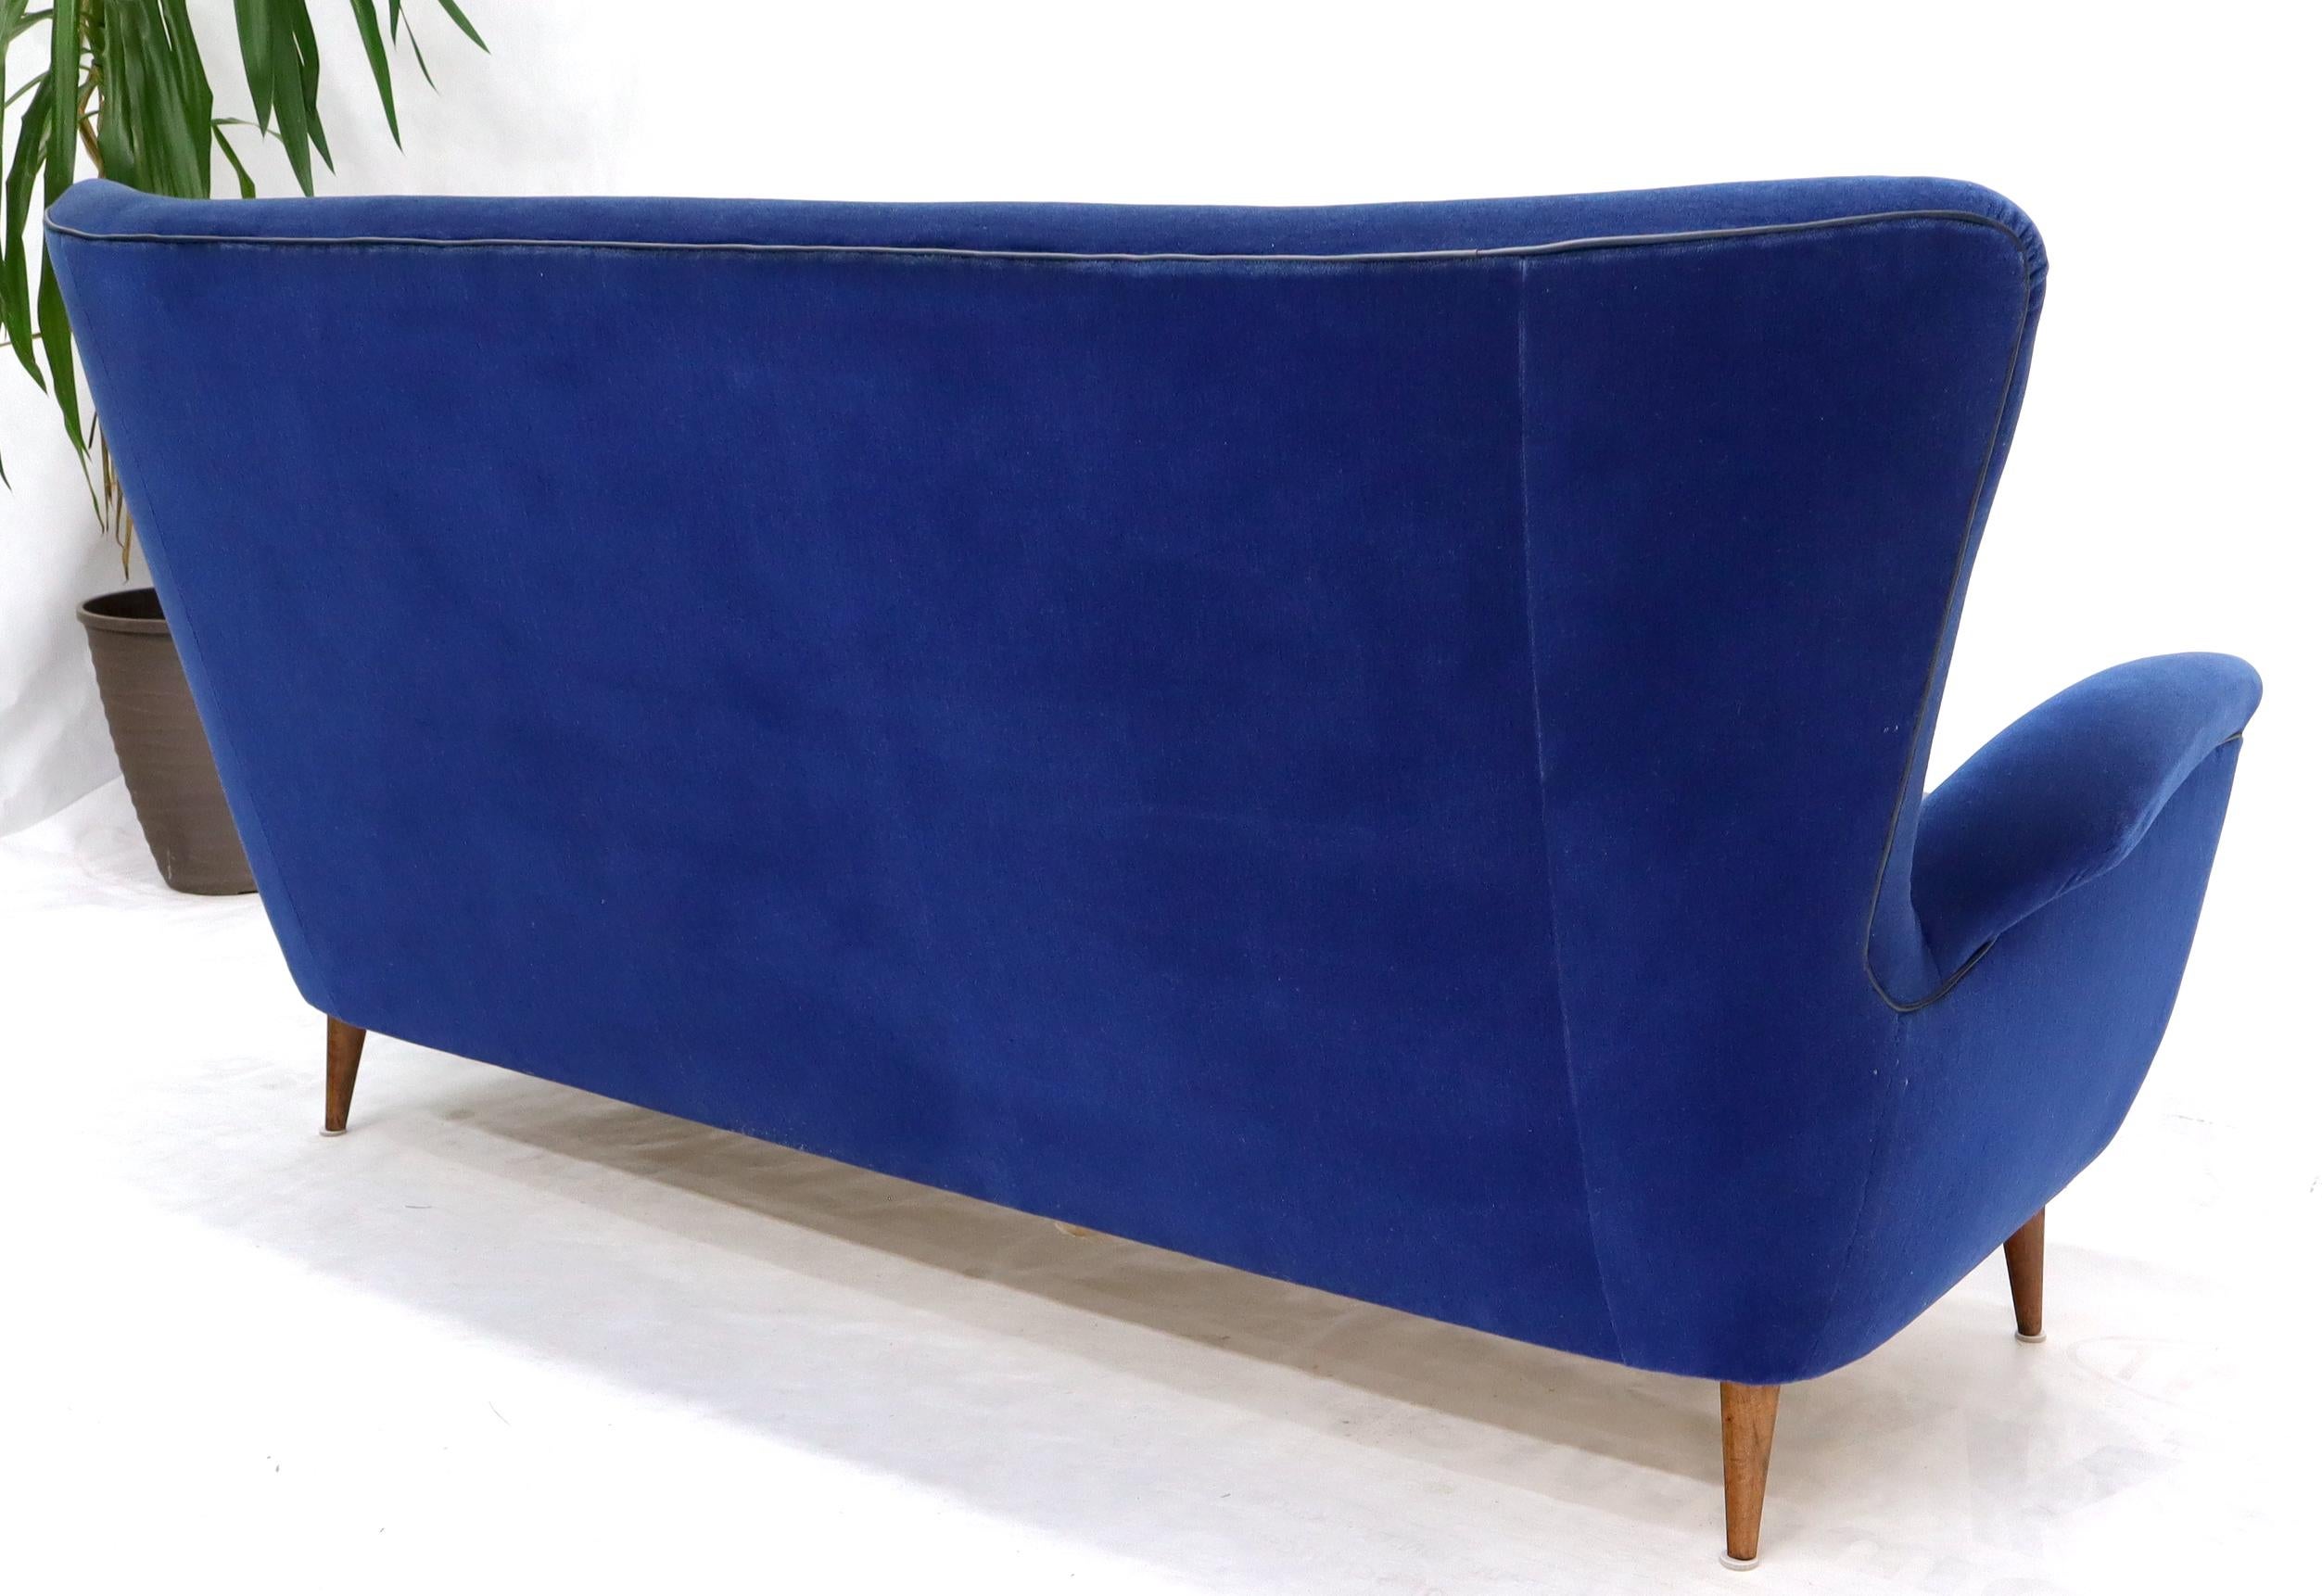 Mid-Century Modern Italian blue mohair sculptural sofa by Paulo Buffa. Very nice Mid-Century Modern form sofa.